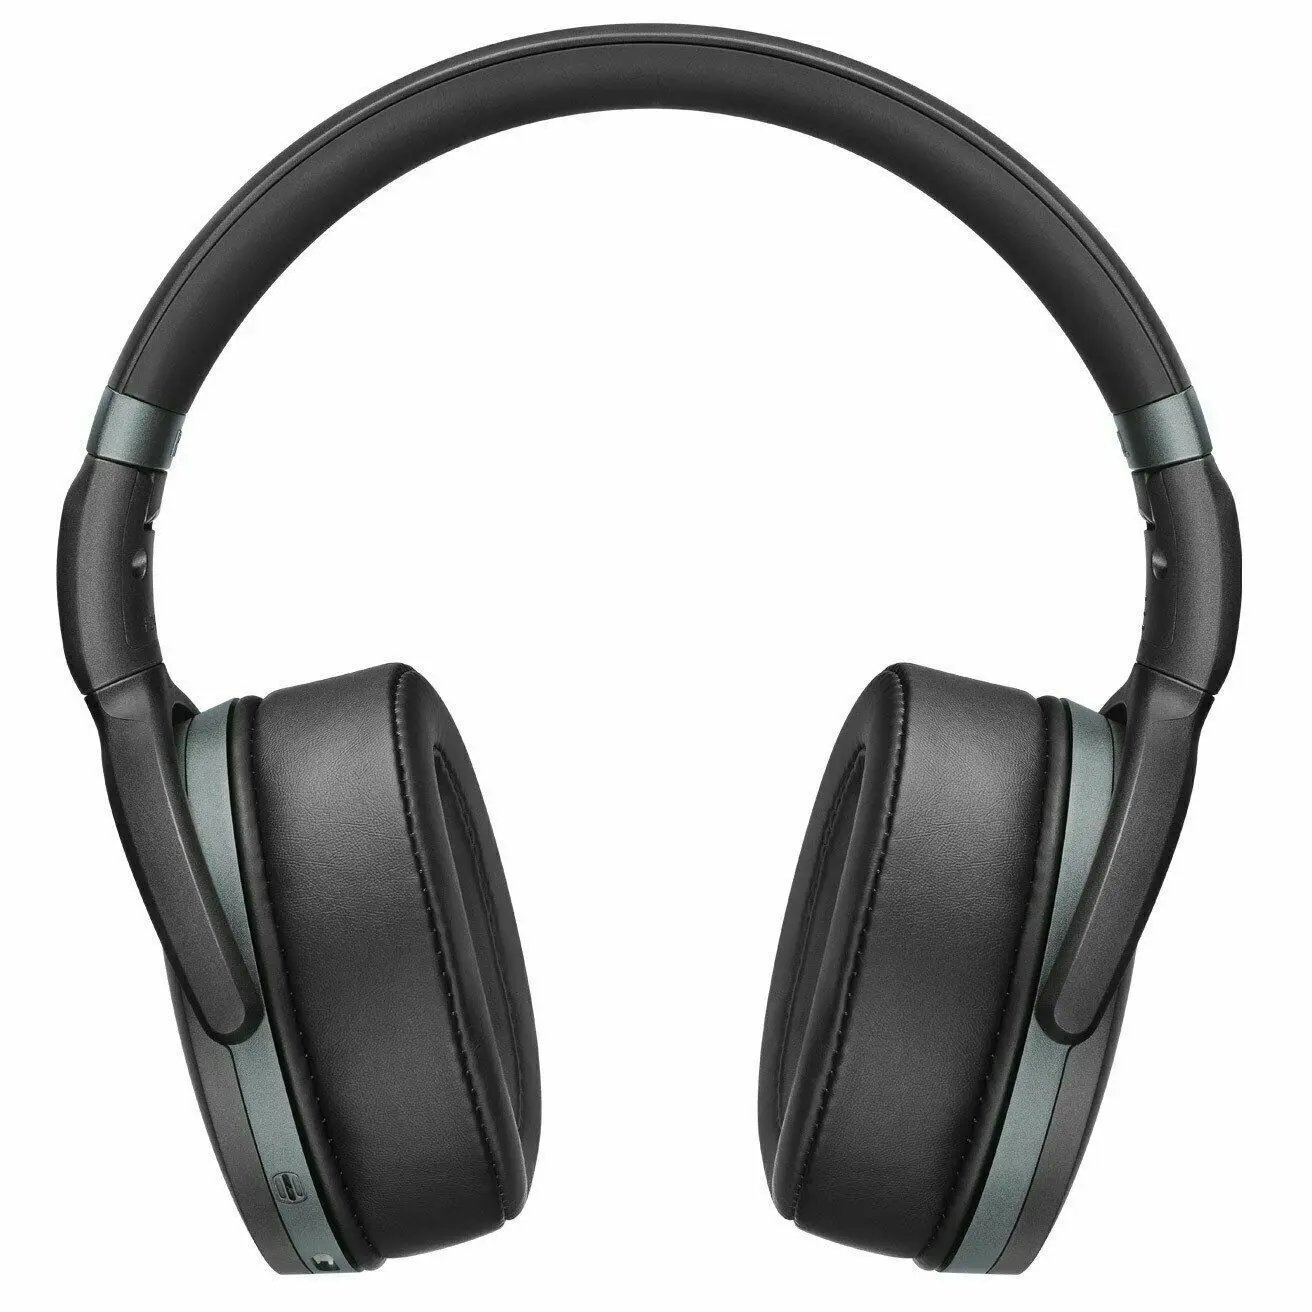 Brand new Original Sennheiser HD 4.40BT Wireless bluetooth Headphones Deep Bass Stereo Earphone Gaming Headset black enlarge